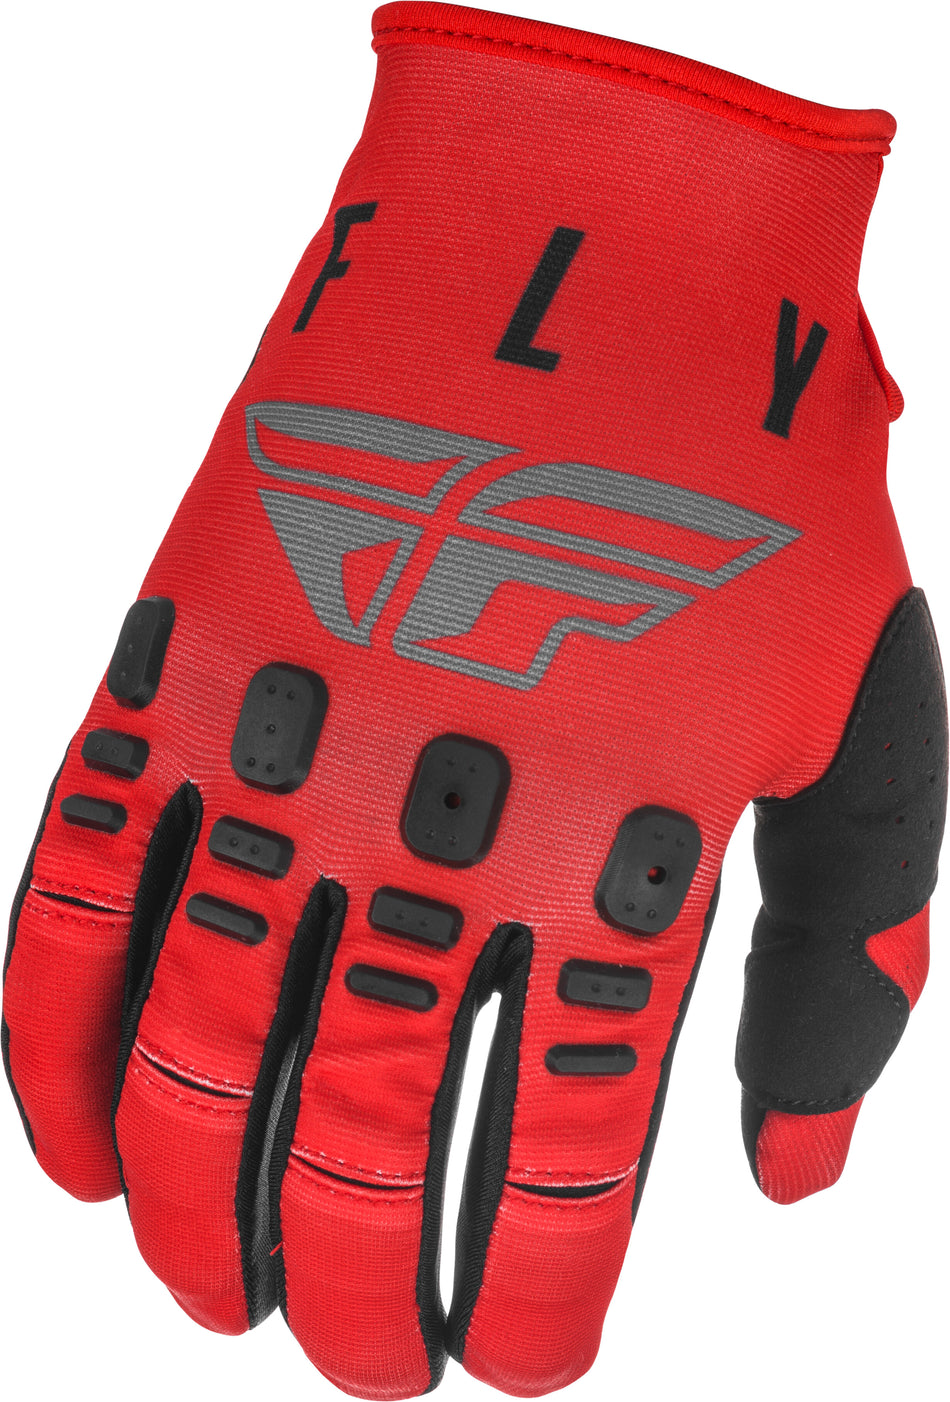 FLY RACING Kinetic K121 Gloves Red/Grey/Black Sz 08 374-41208